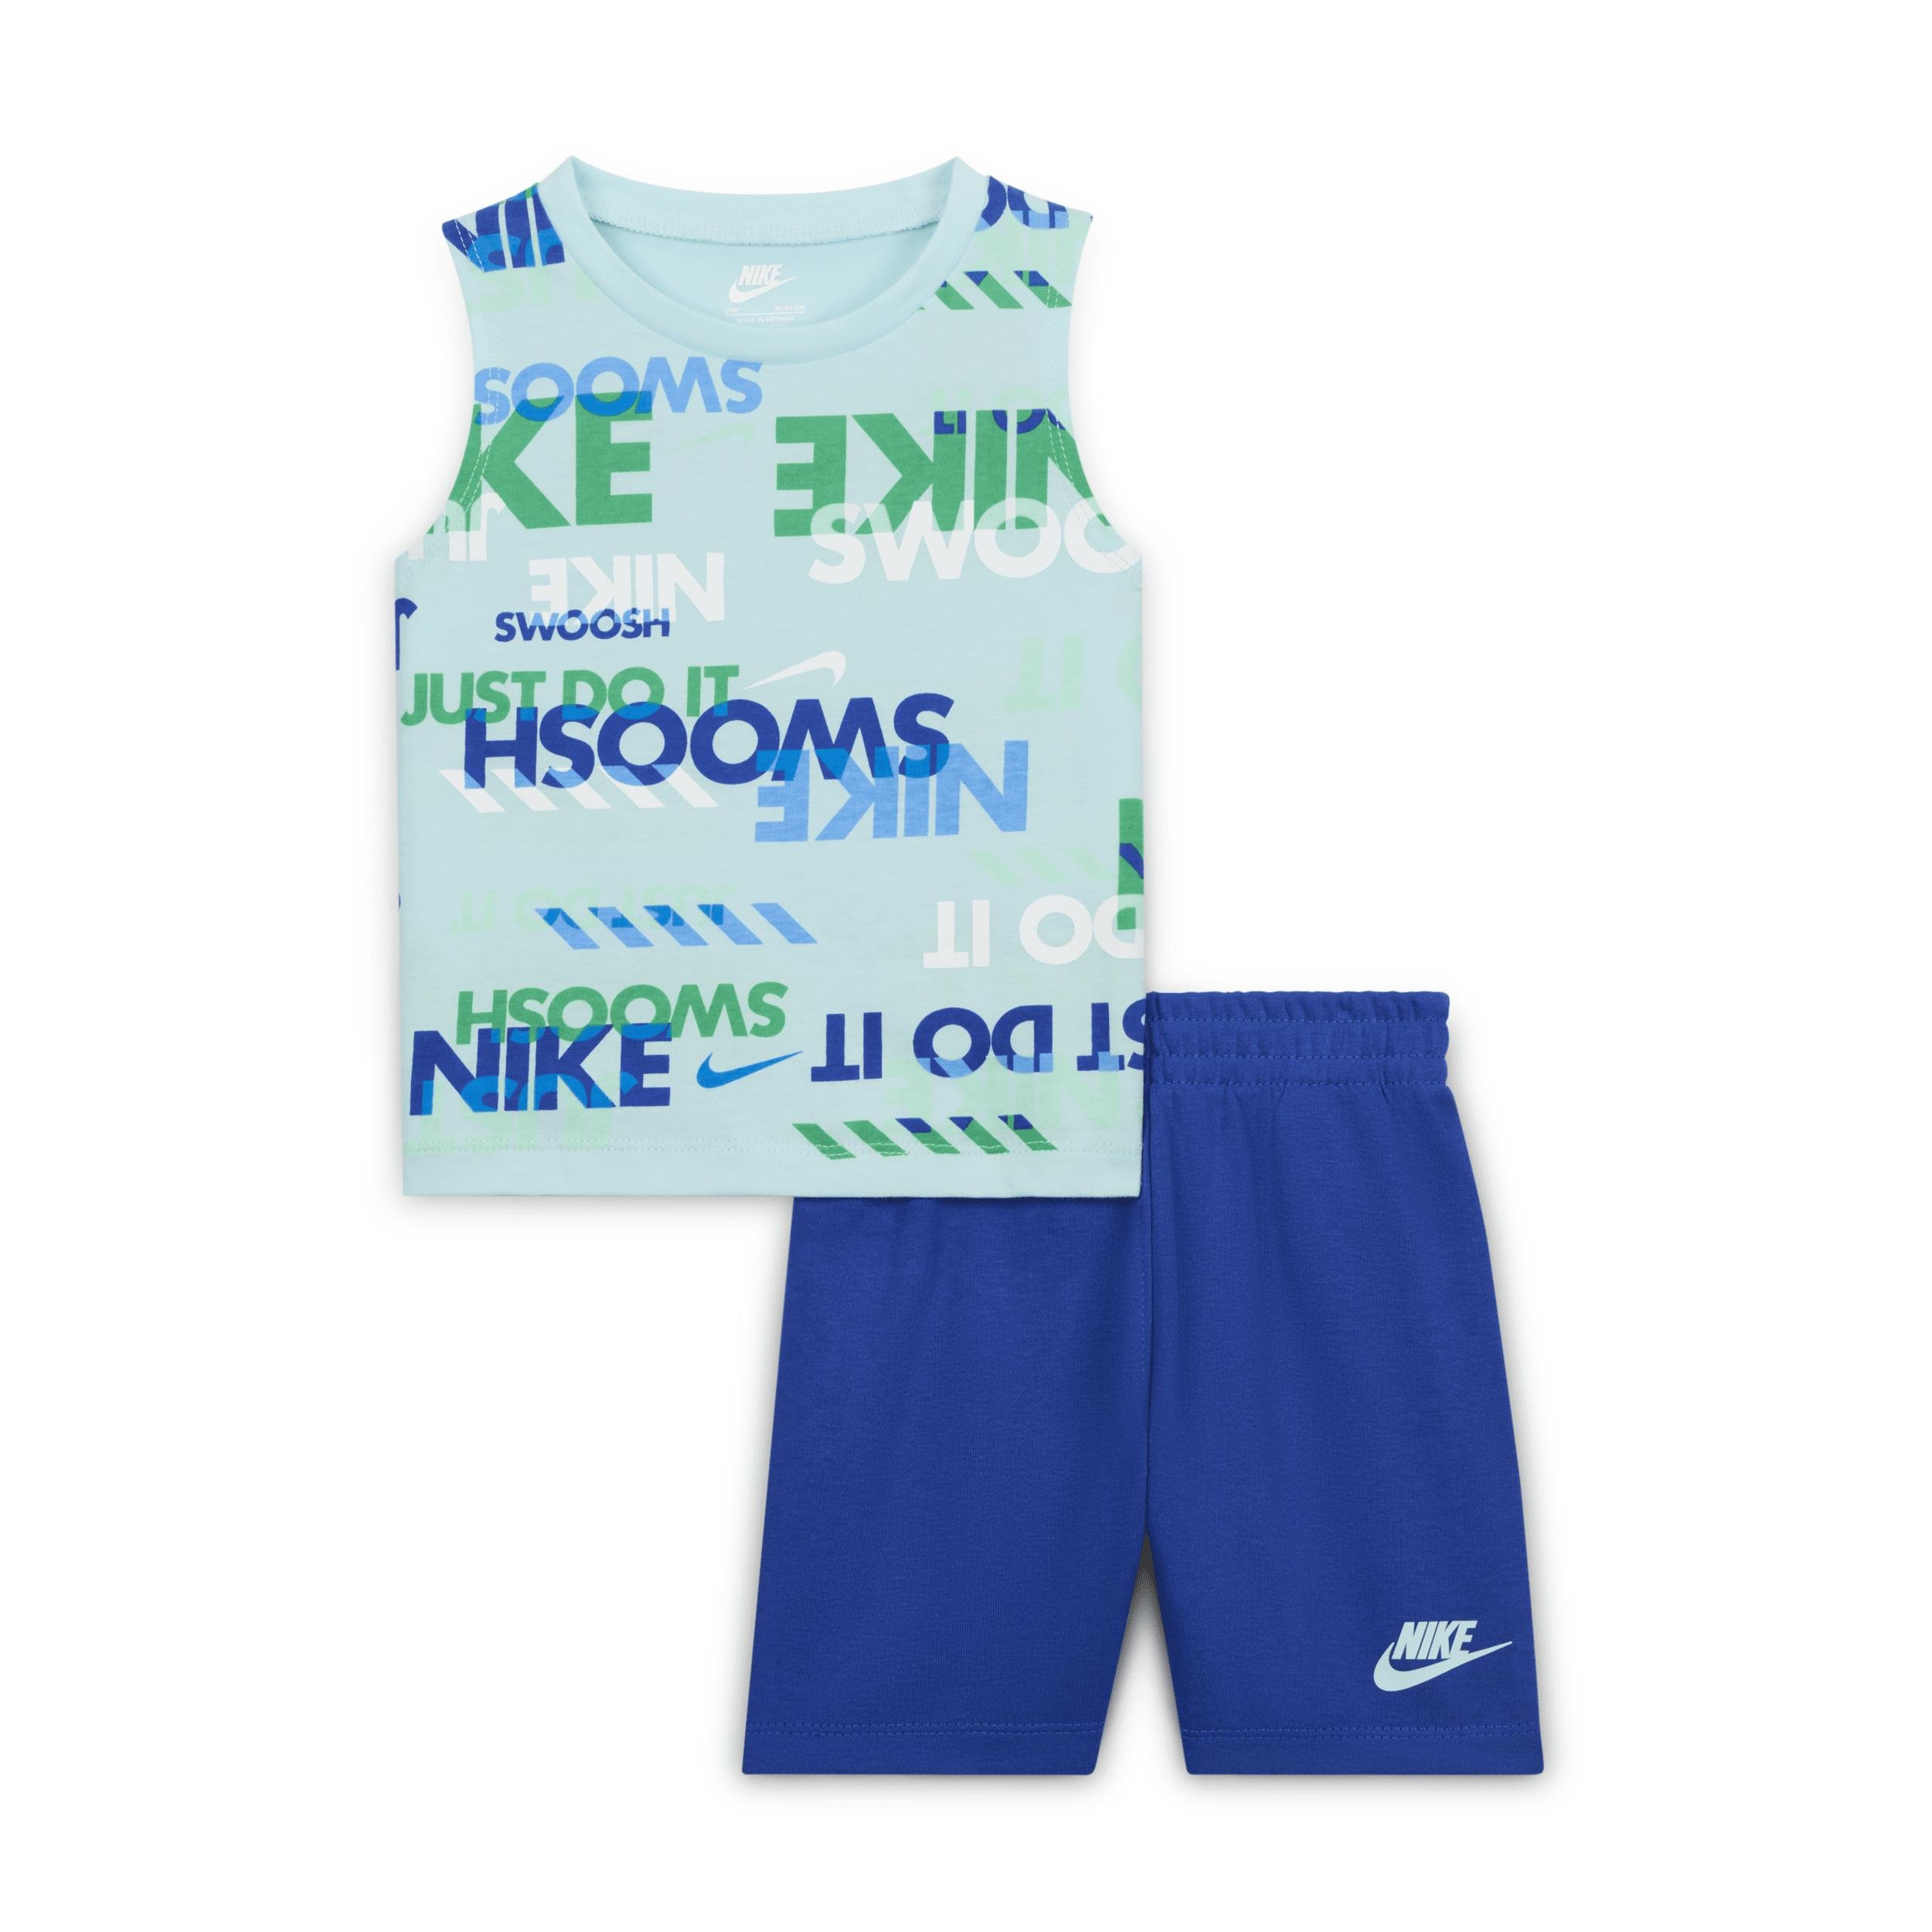 Nike Sportswear PE Baby (12-24M) Printed Tank Top Set by NIKE